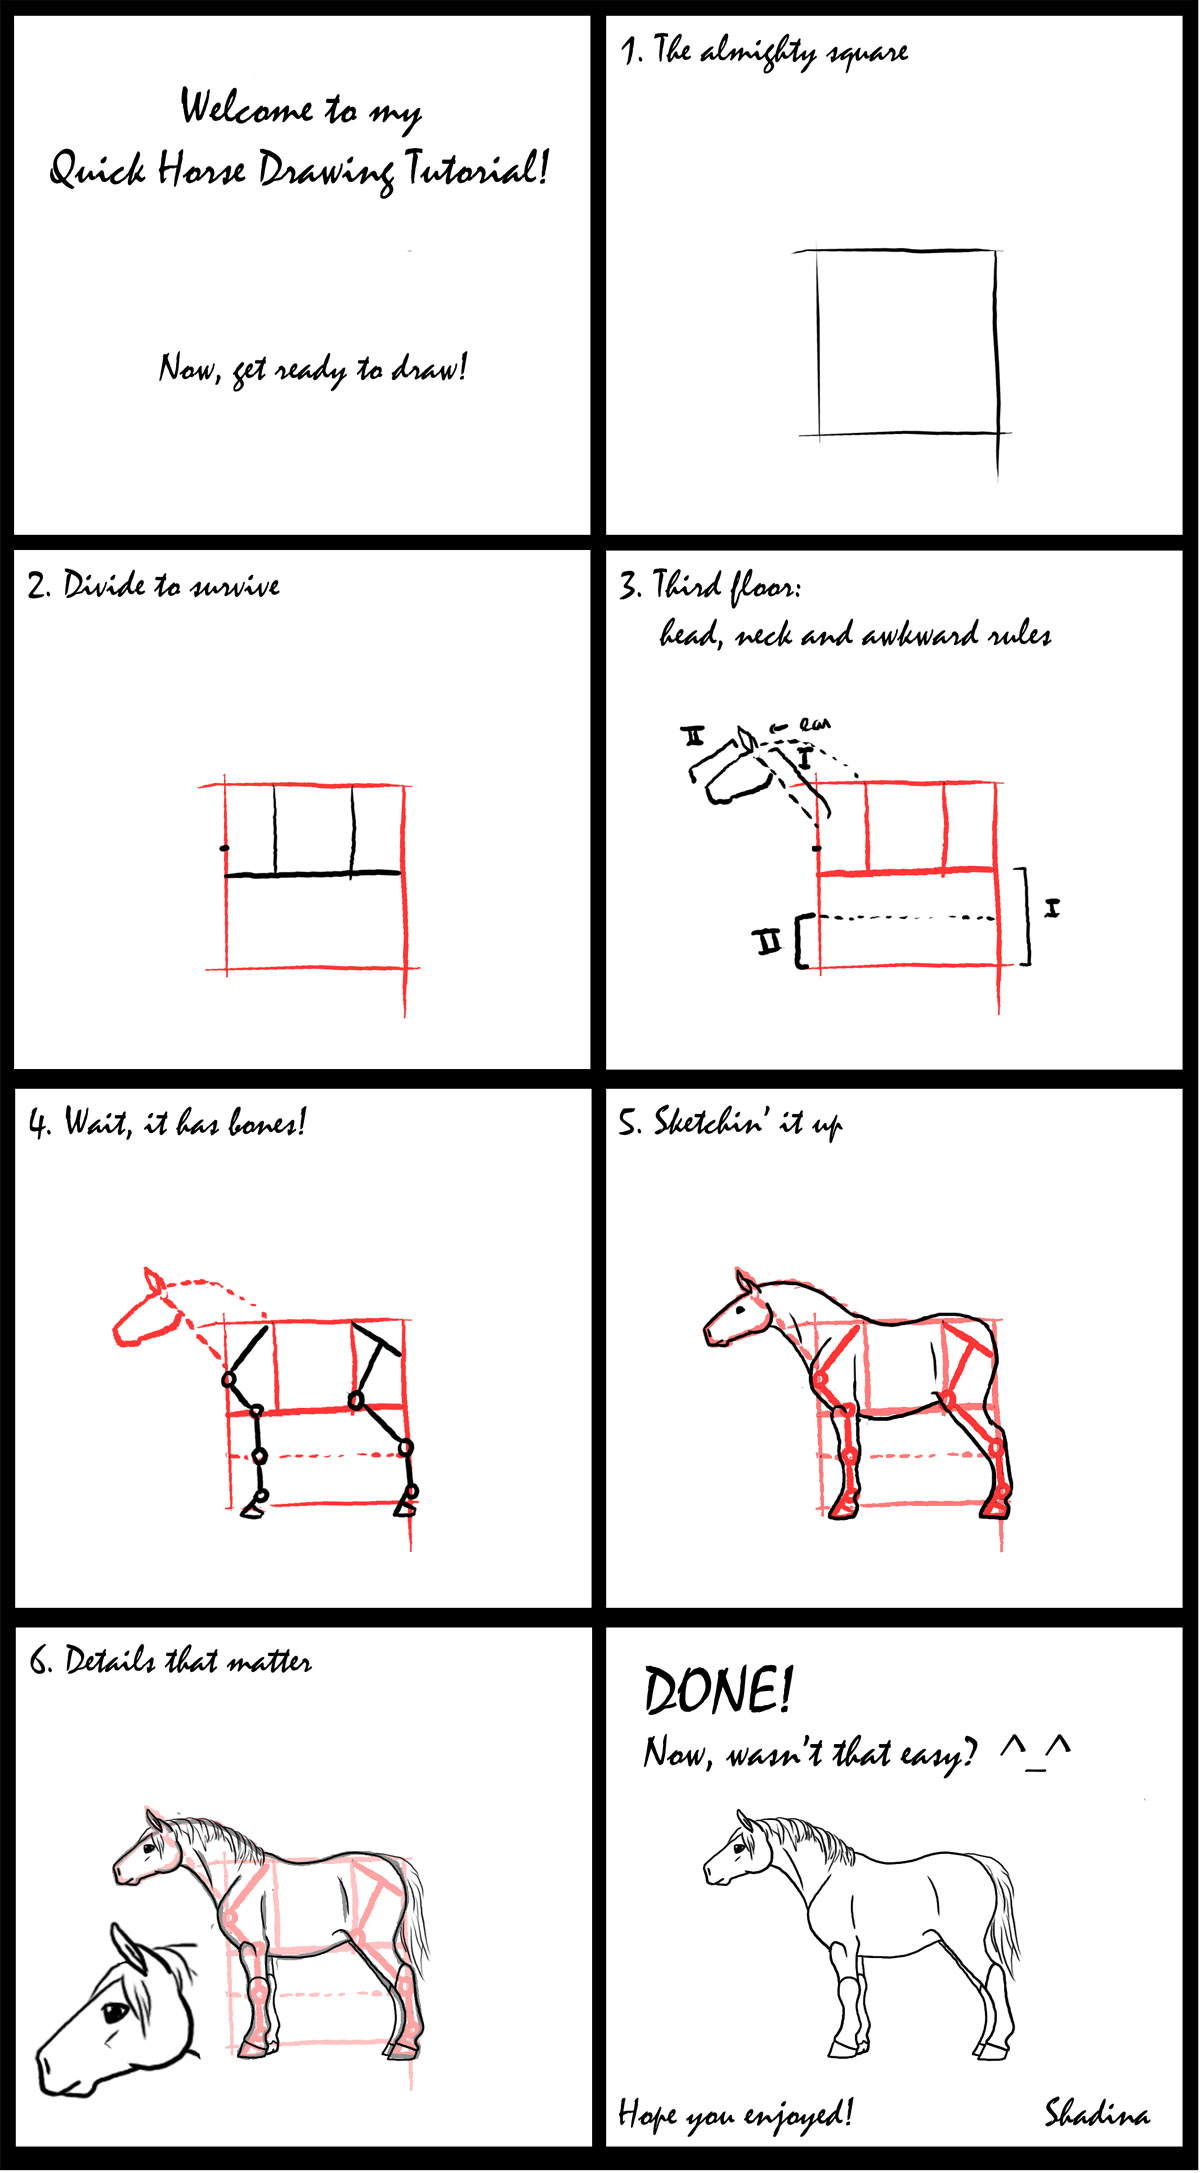 Quick Horse Drawing Tutorial by ShadinaLonesea